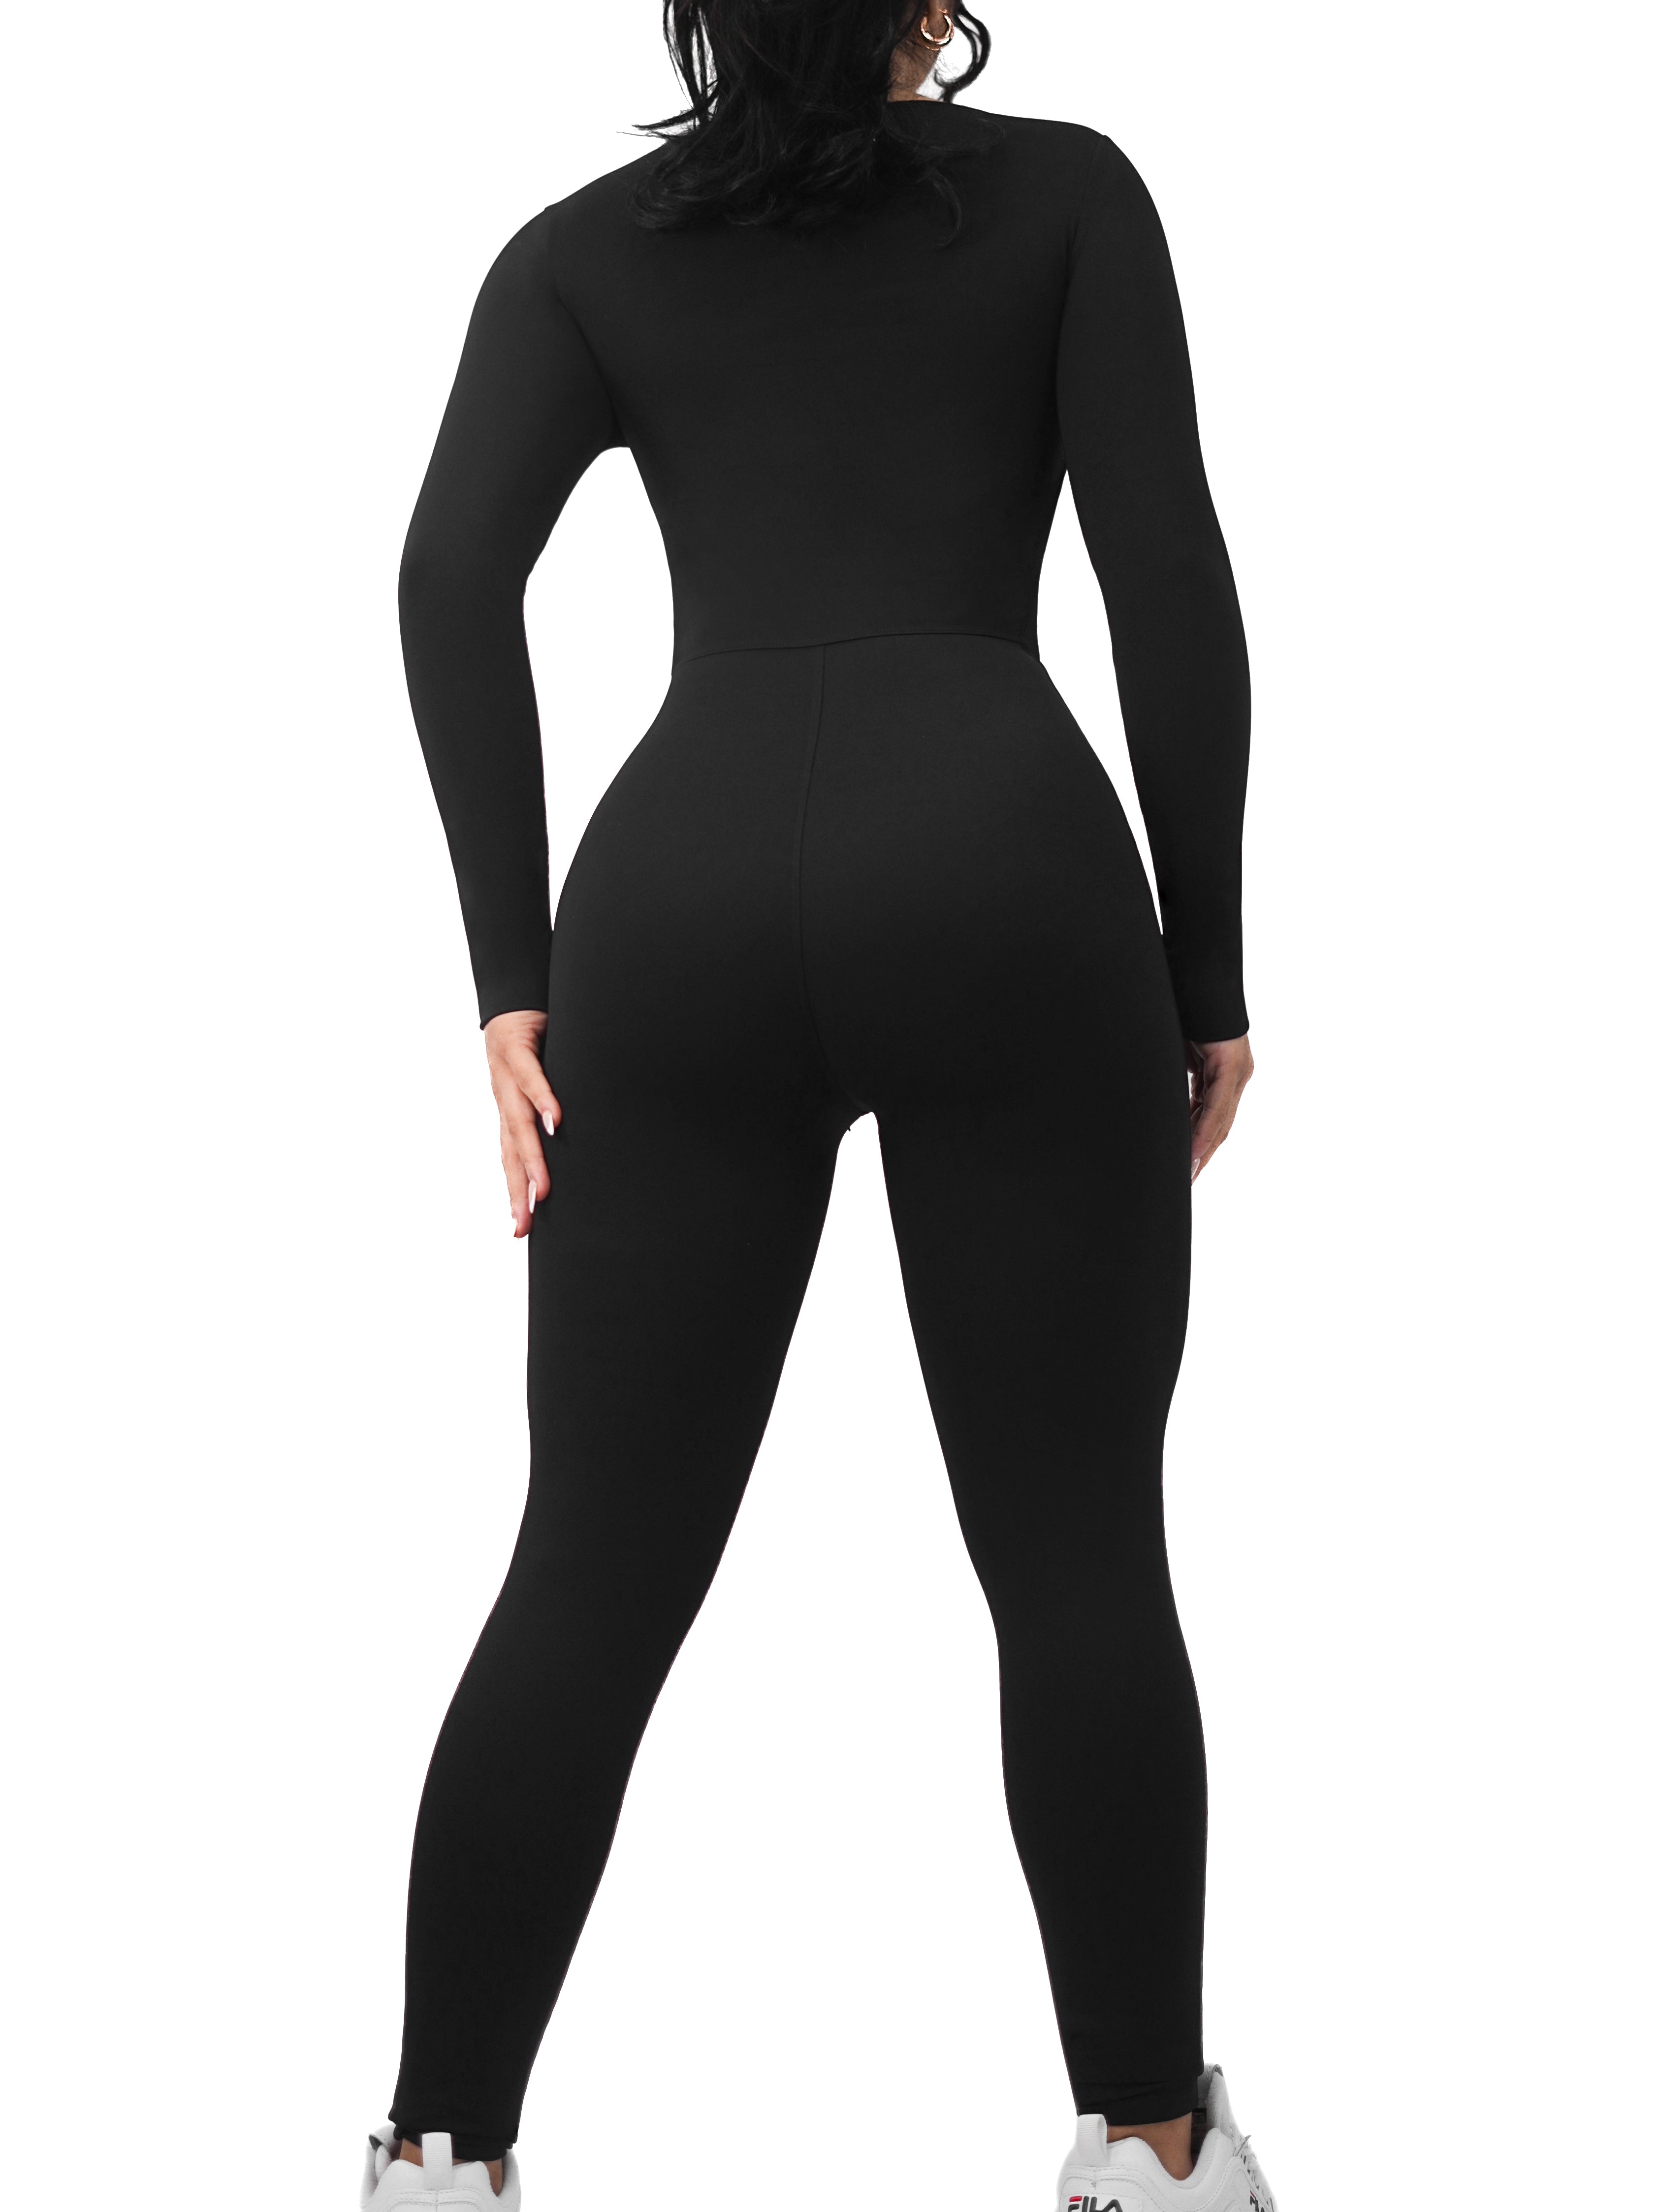 American Doll Long Sleeve Jumpsuit (Black)